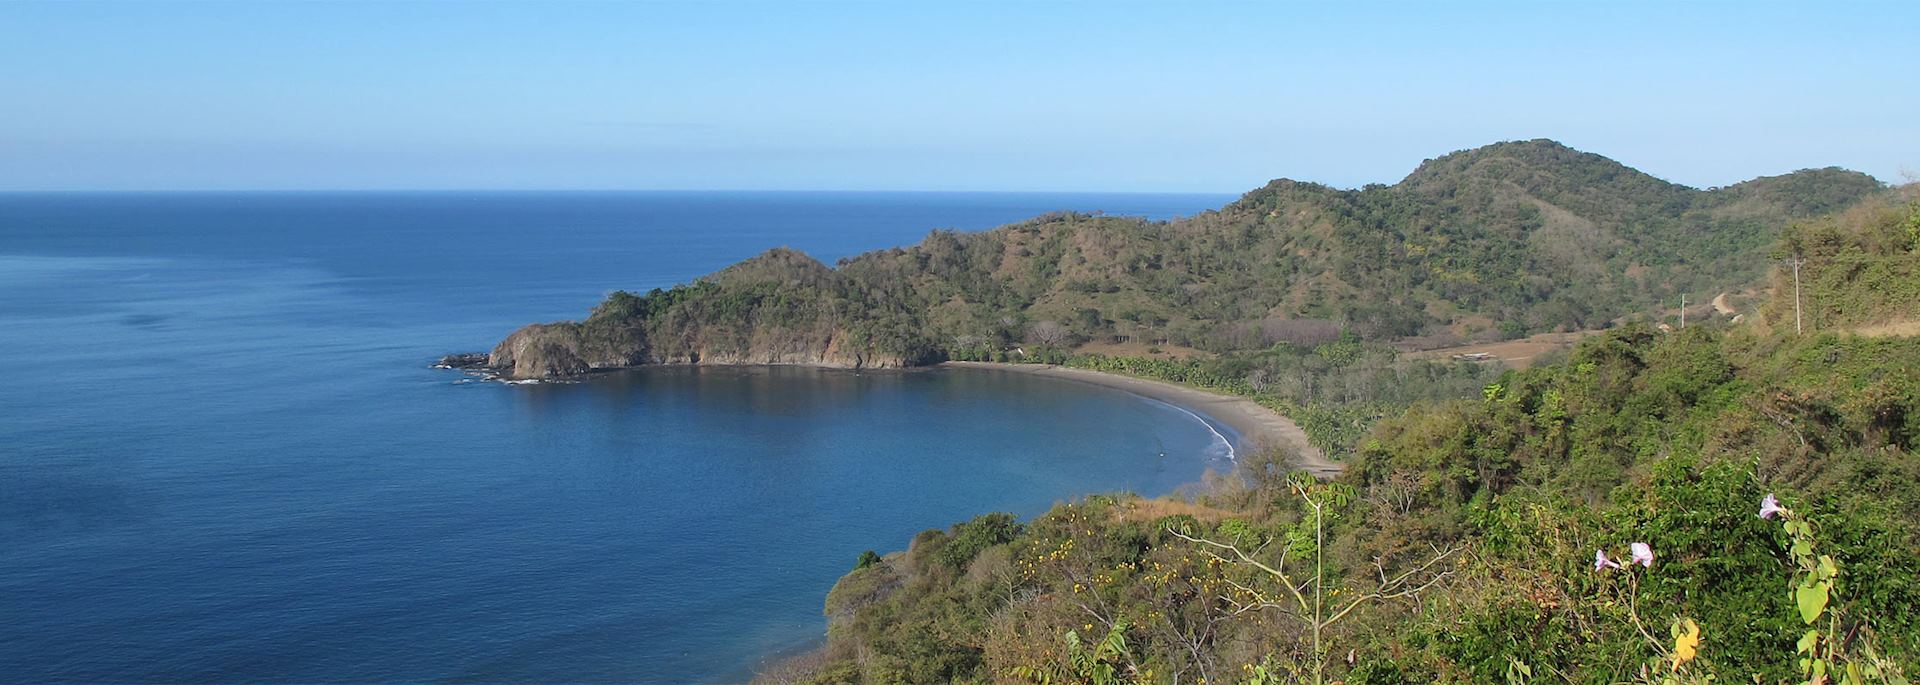 View of the beach at Punta Islita